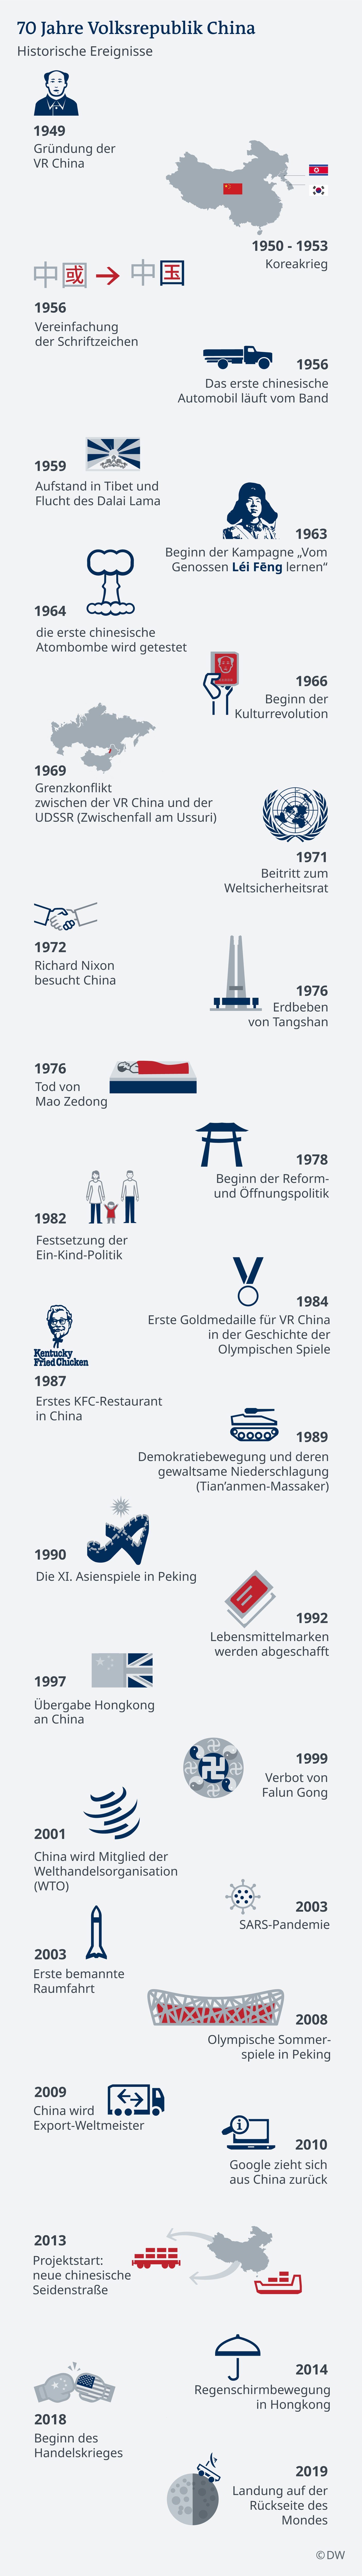 Infografik 70 Jahre VR China DE